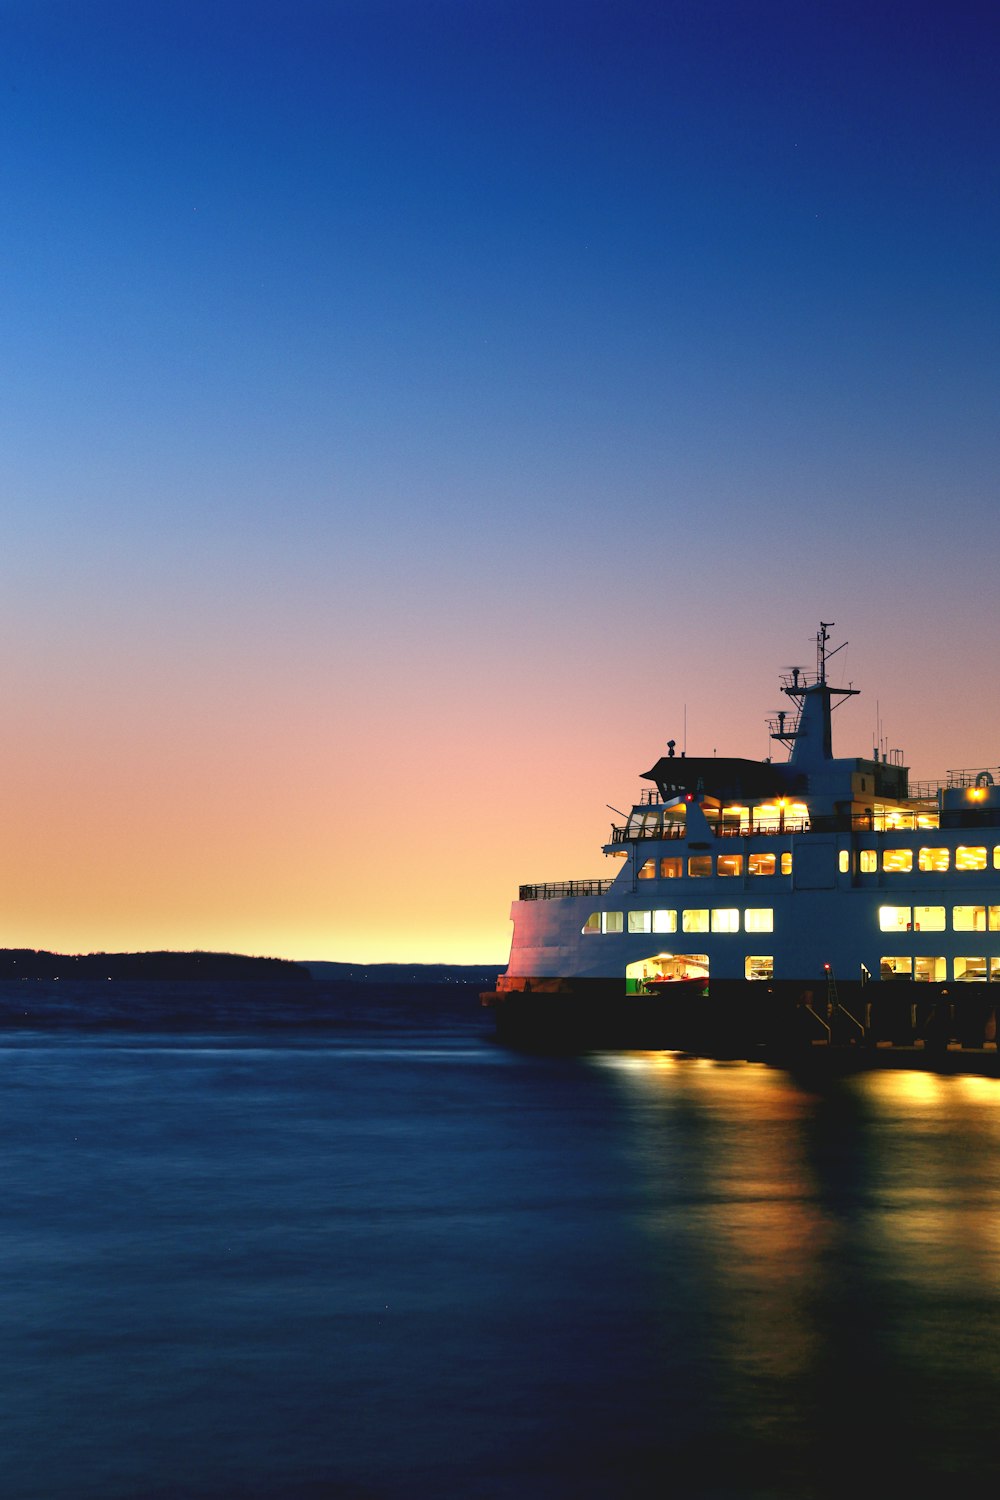 lighted cruiseship on sea taken during golden hour